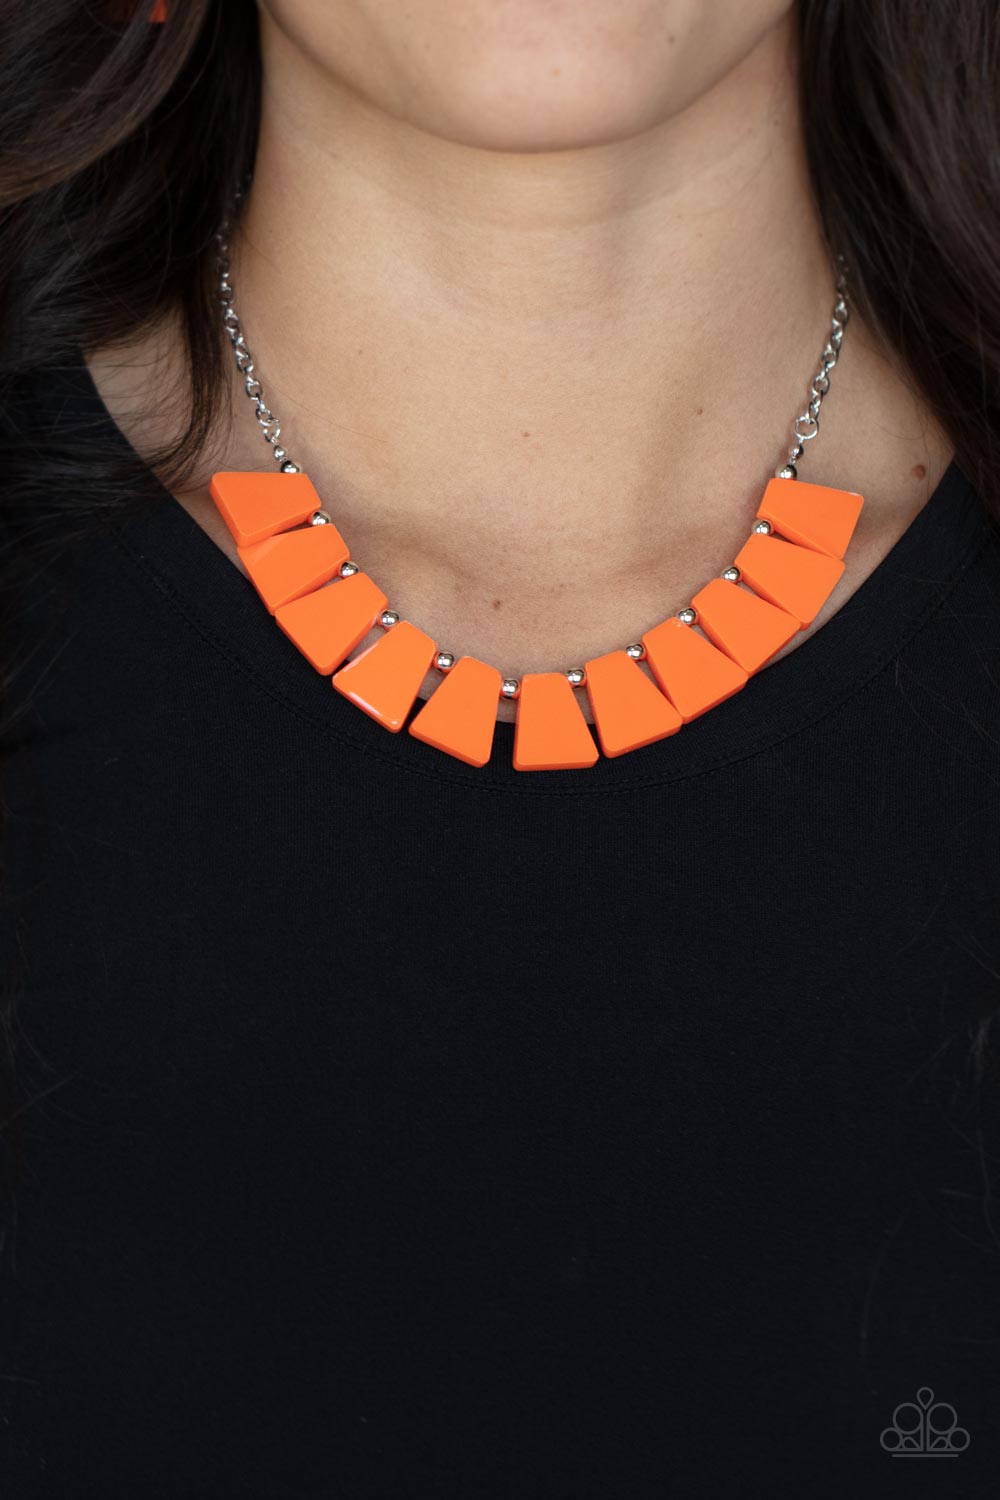 Vivaciously Versatile- Orange and Silver Necklace- Paparazzi Accessories